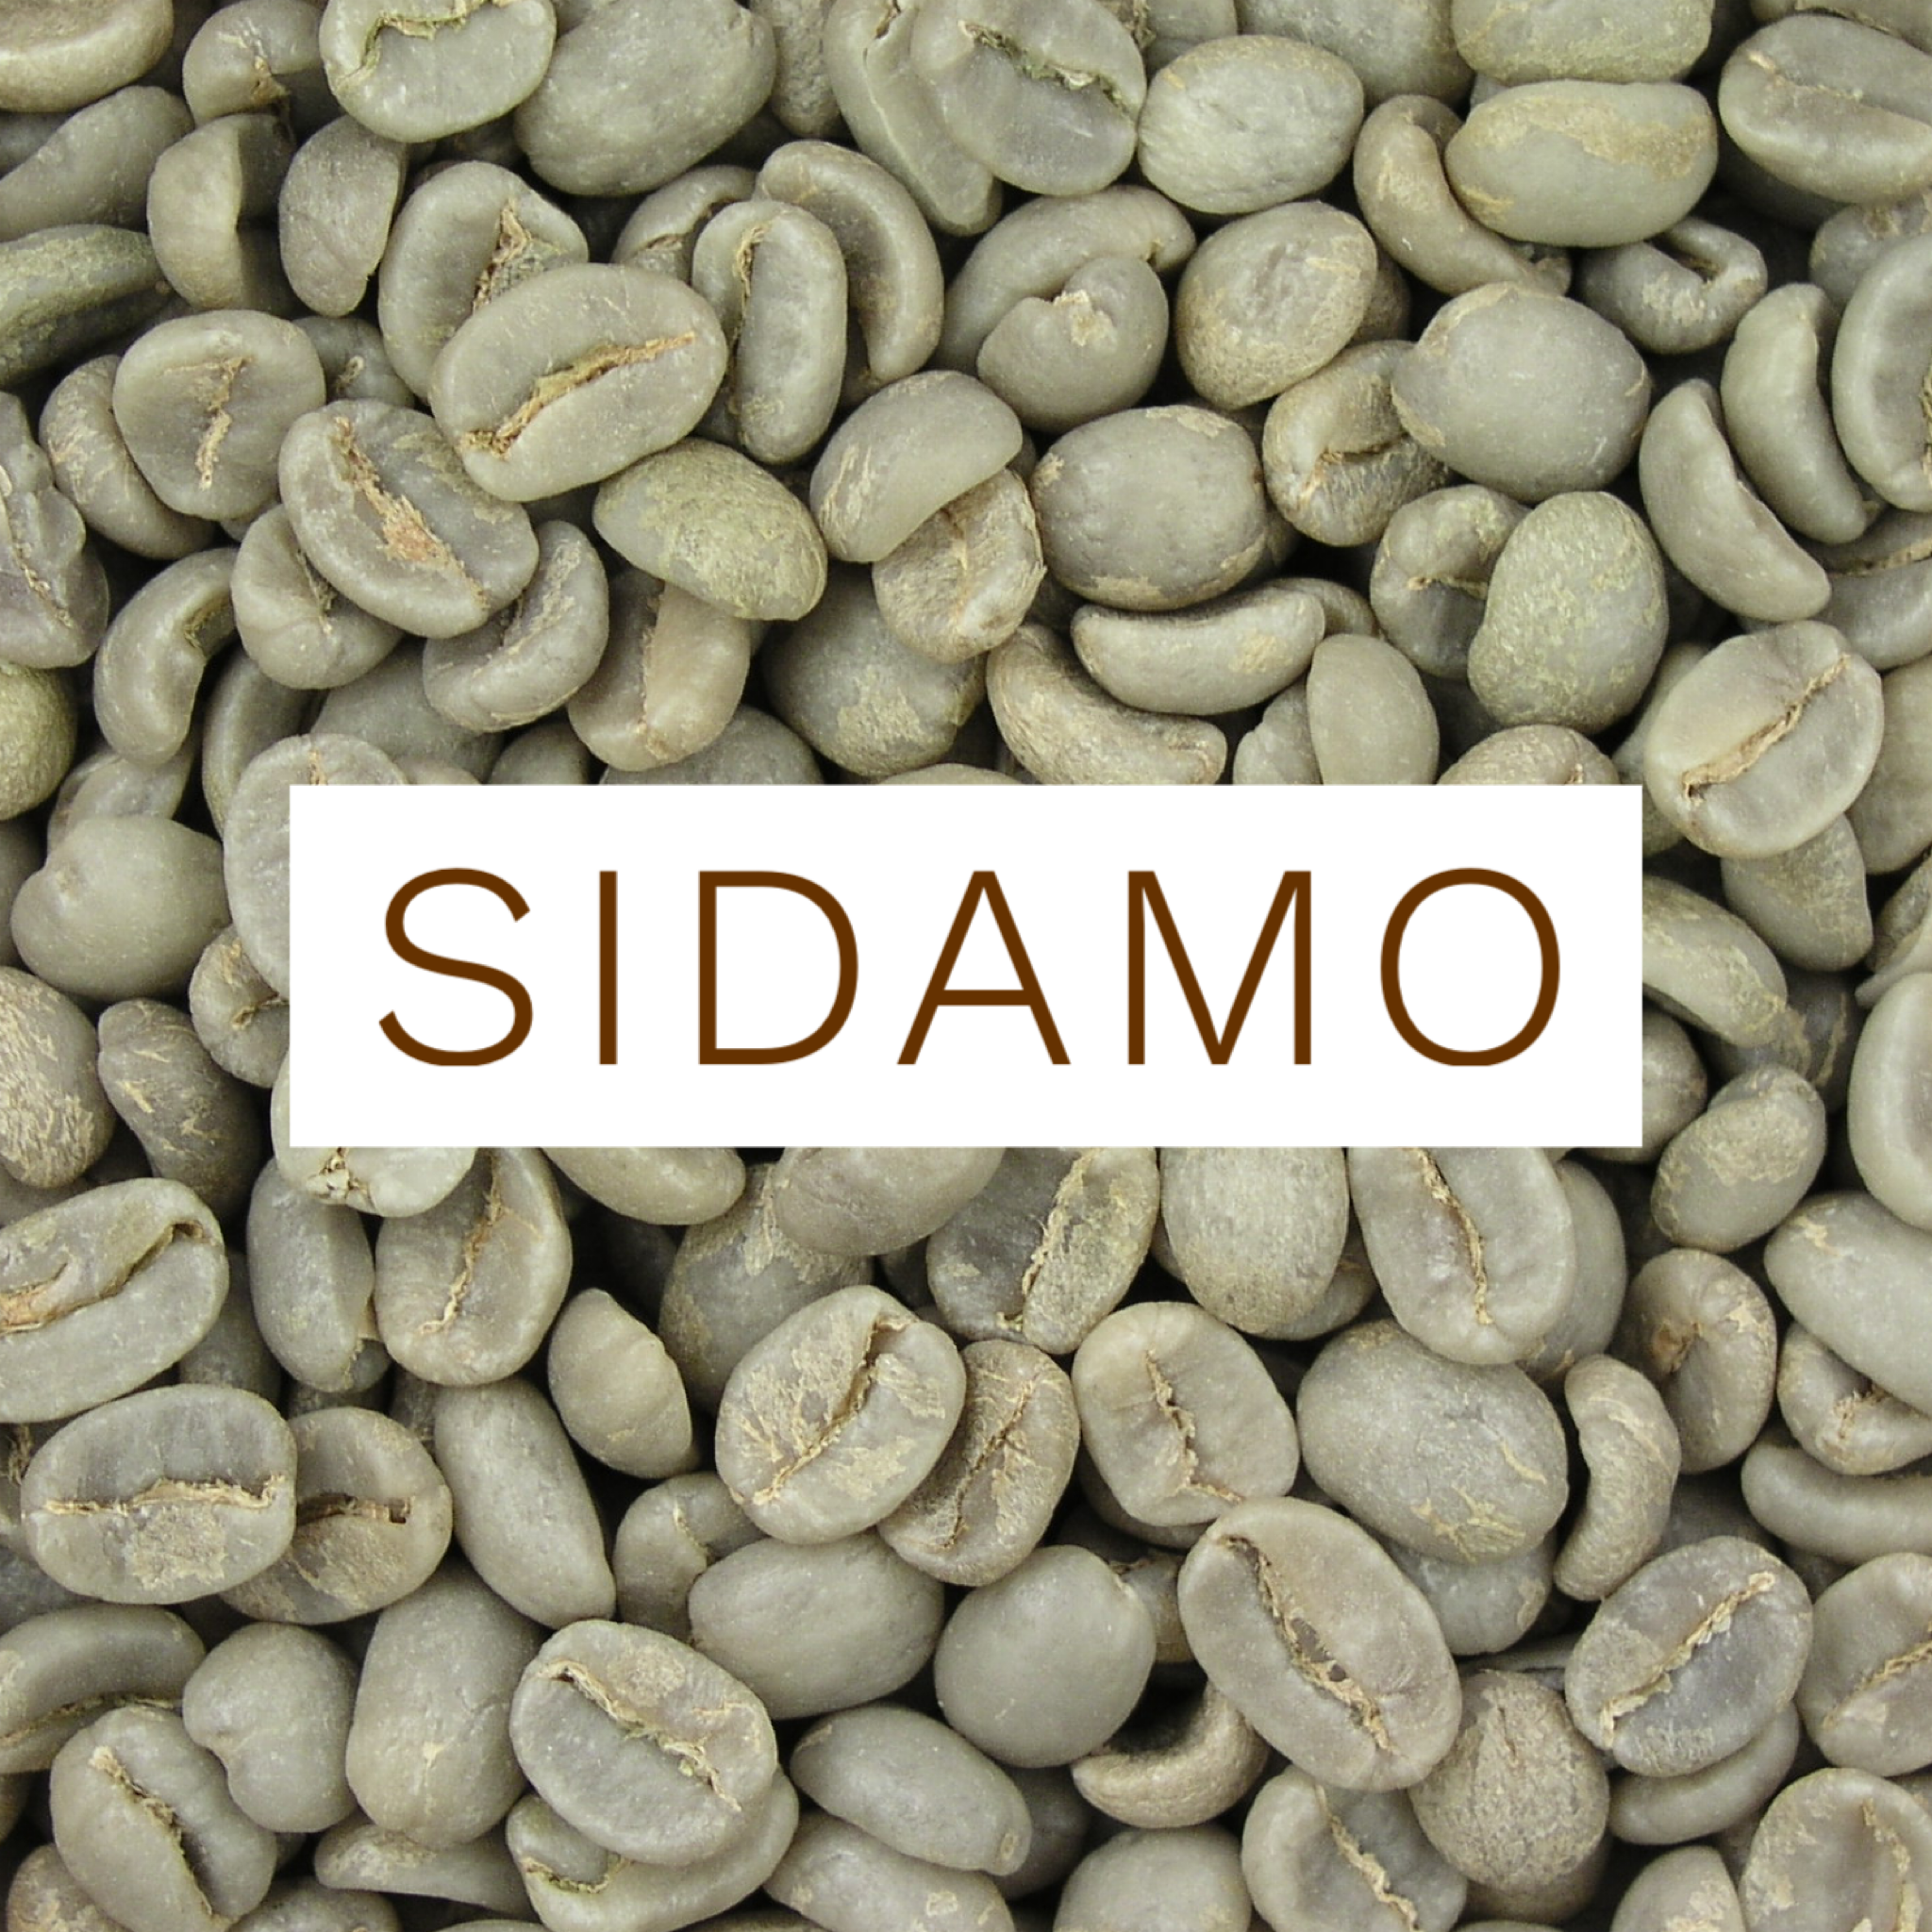 Sidama - raw green beans